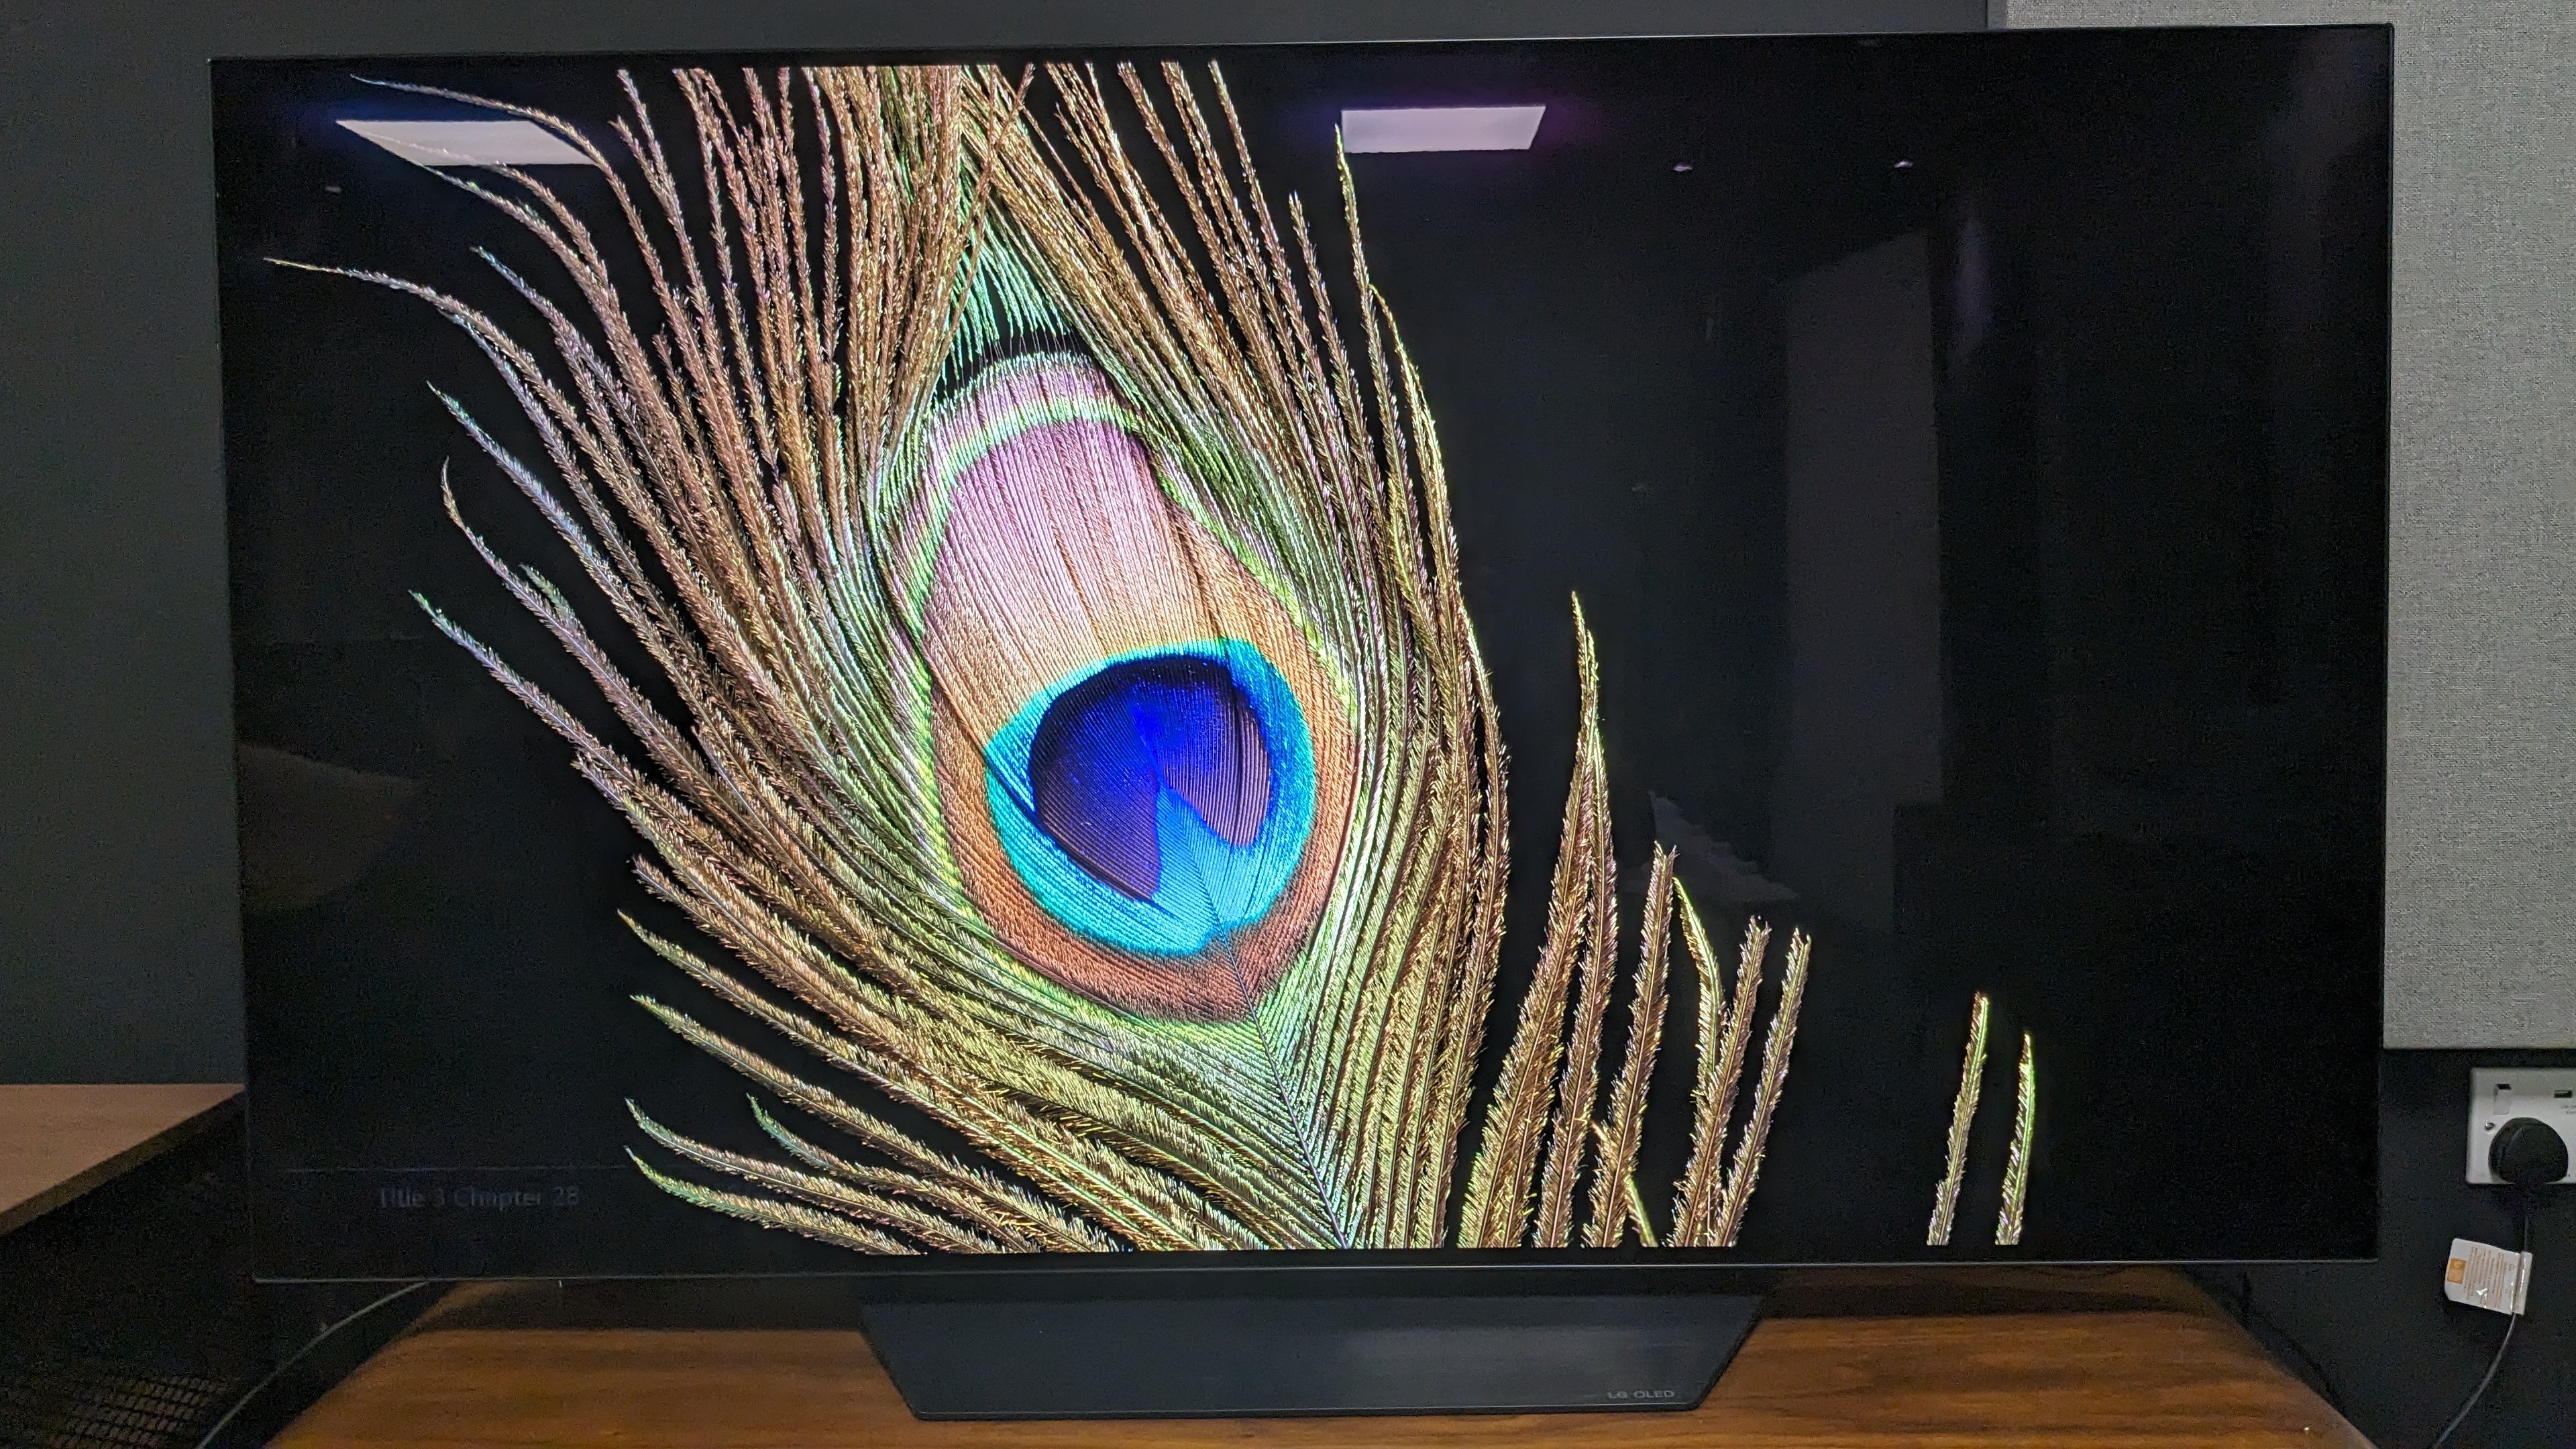 LG B3 TV displaying peacock feathers on screen